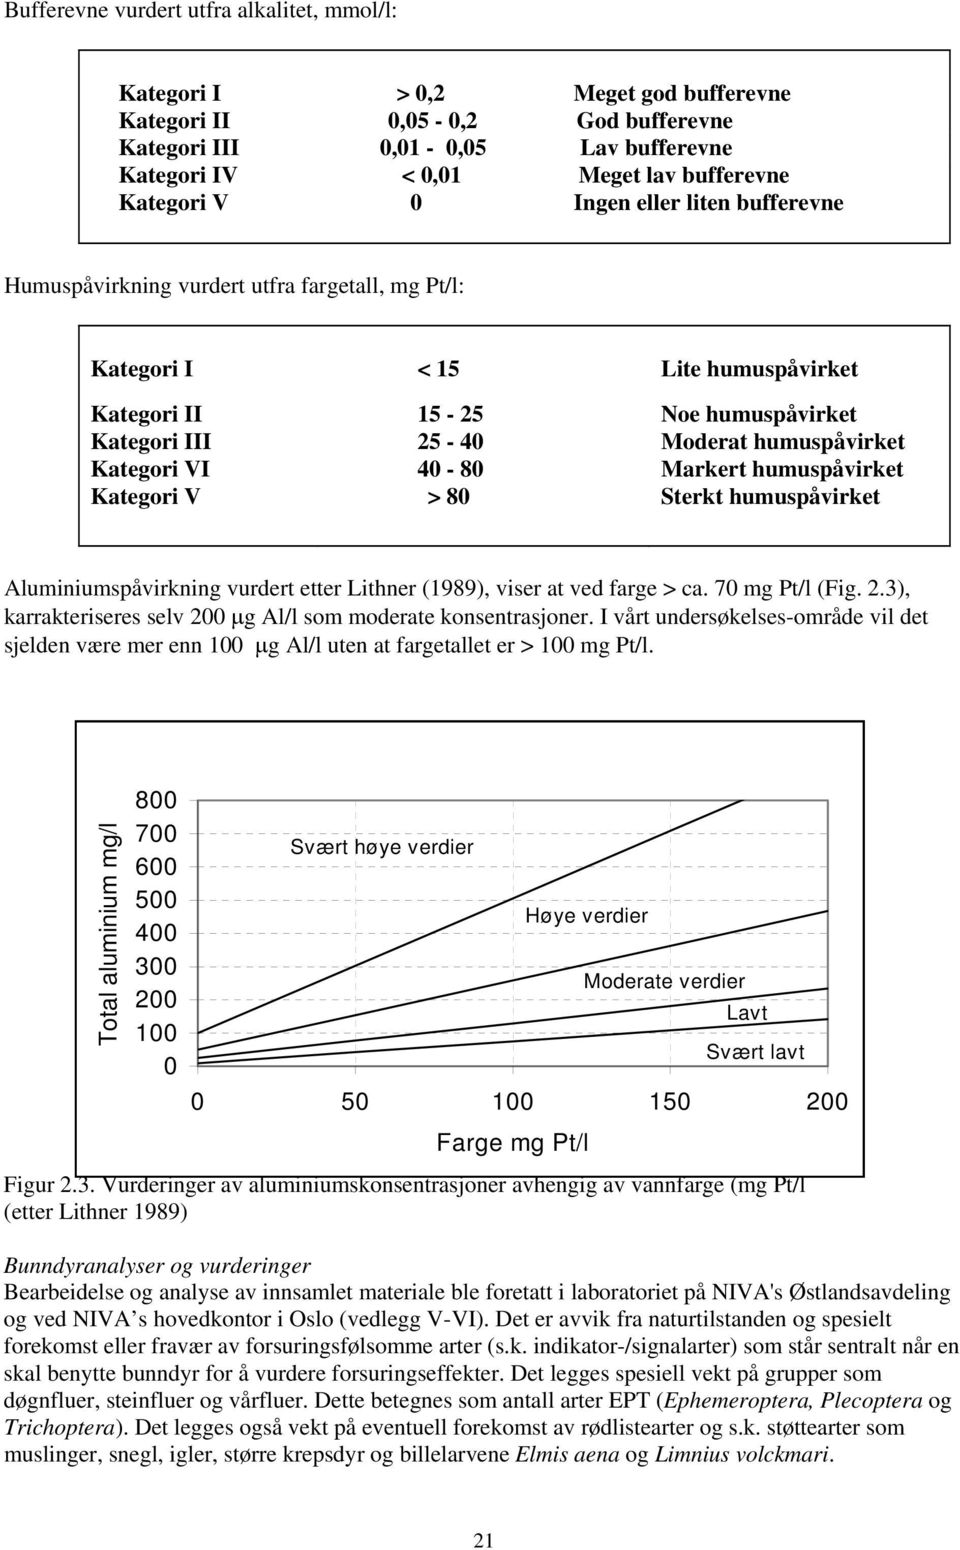 humuspåvirket Kategori VI 40-80 Markert humuspåvirket Kategori V > 80 Sterkt humuspåvirket Aluminiumspåvirkning vurdert etter Lithner (1989), viser at ved farge > ca. 70 mg Pt/l (Fig. 2.